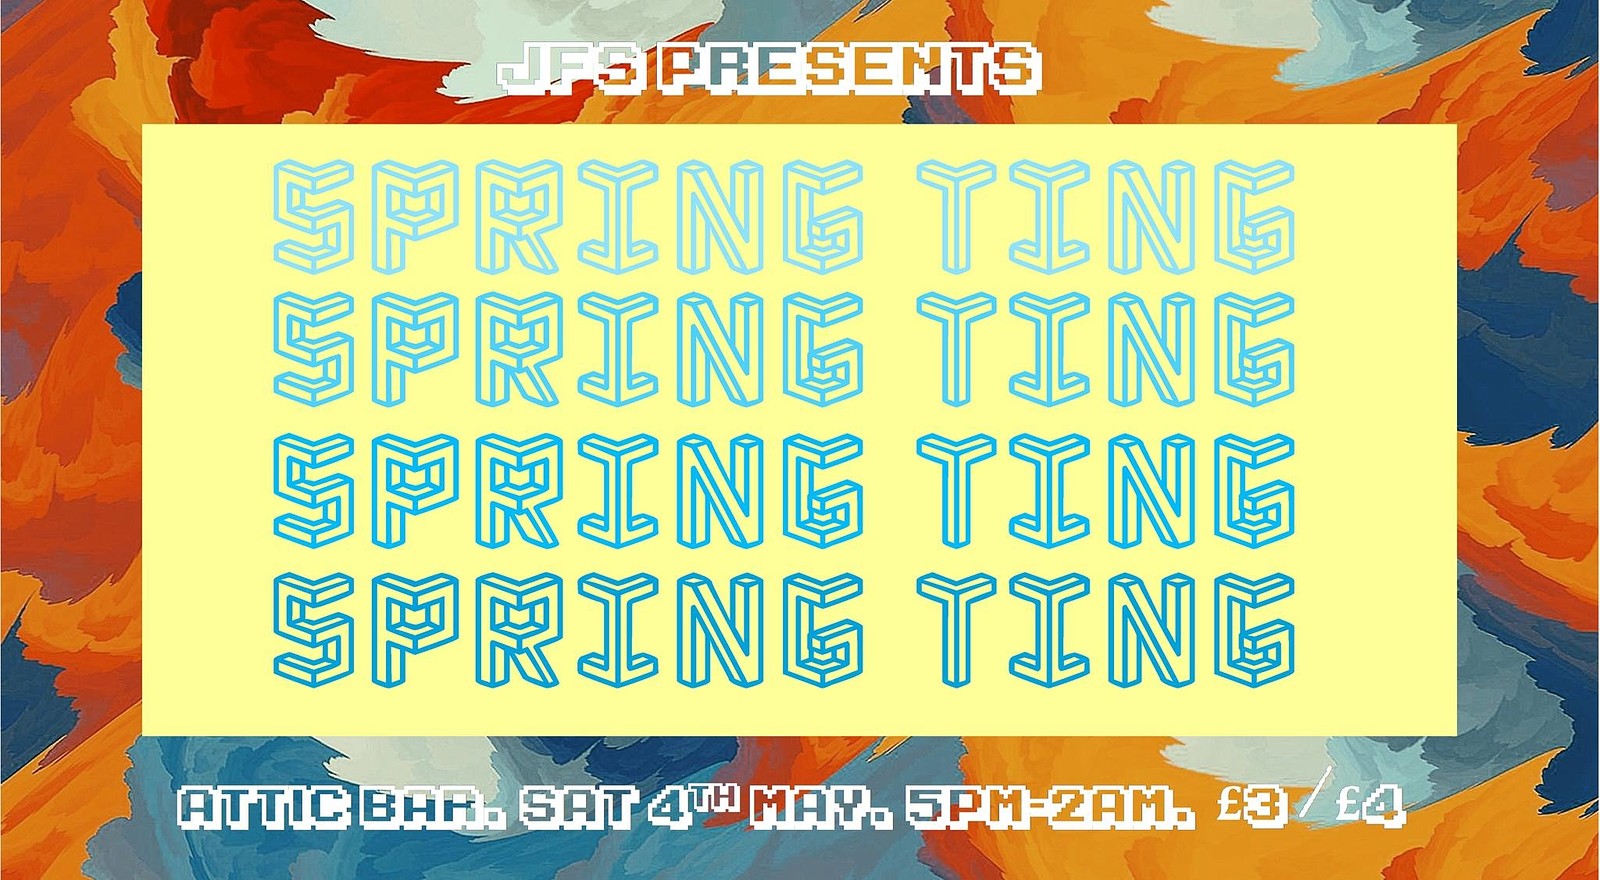 Spring Ting Festival 2019 at The Attic Bar